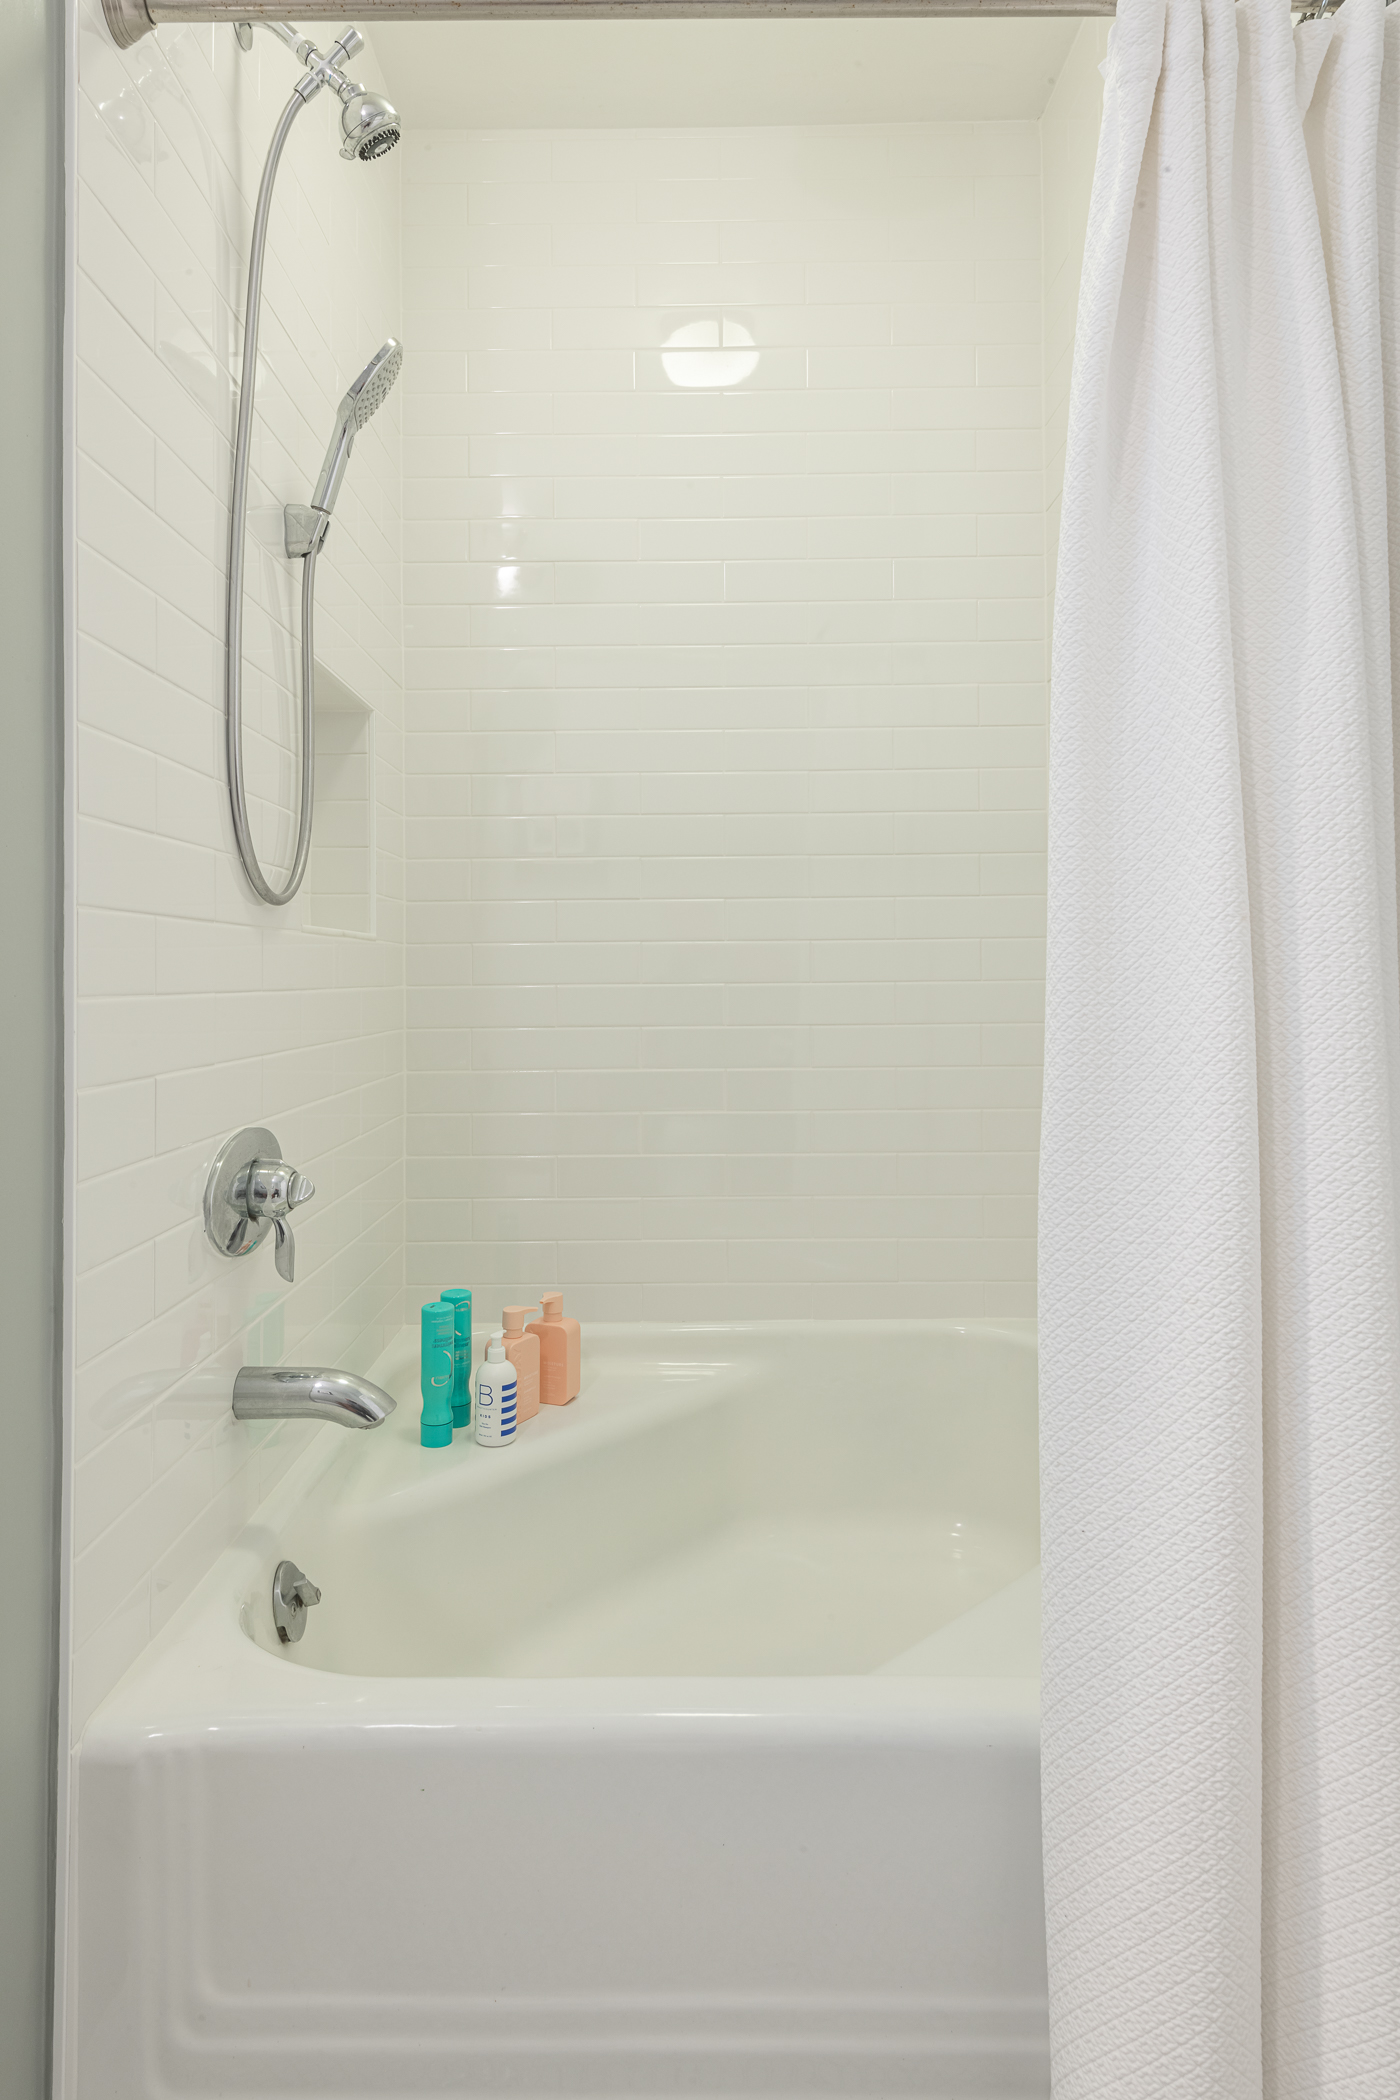 White tiled bathroom shower and tub